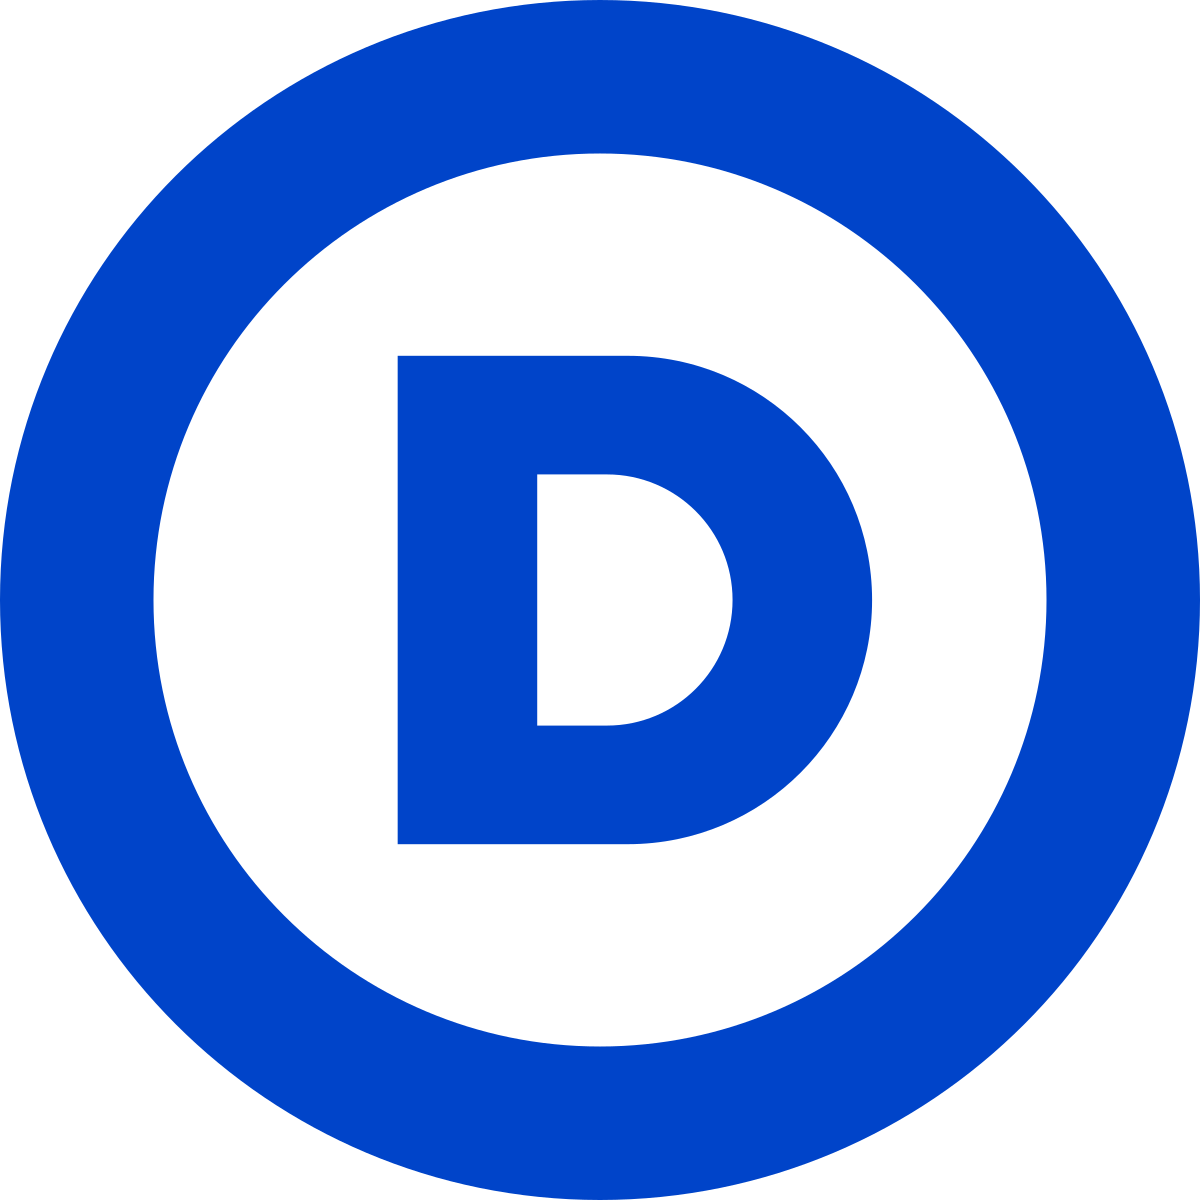 Democratic National Committee - Wikipedia